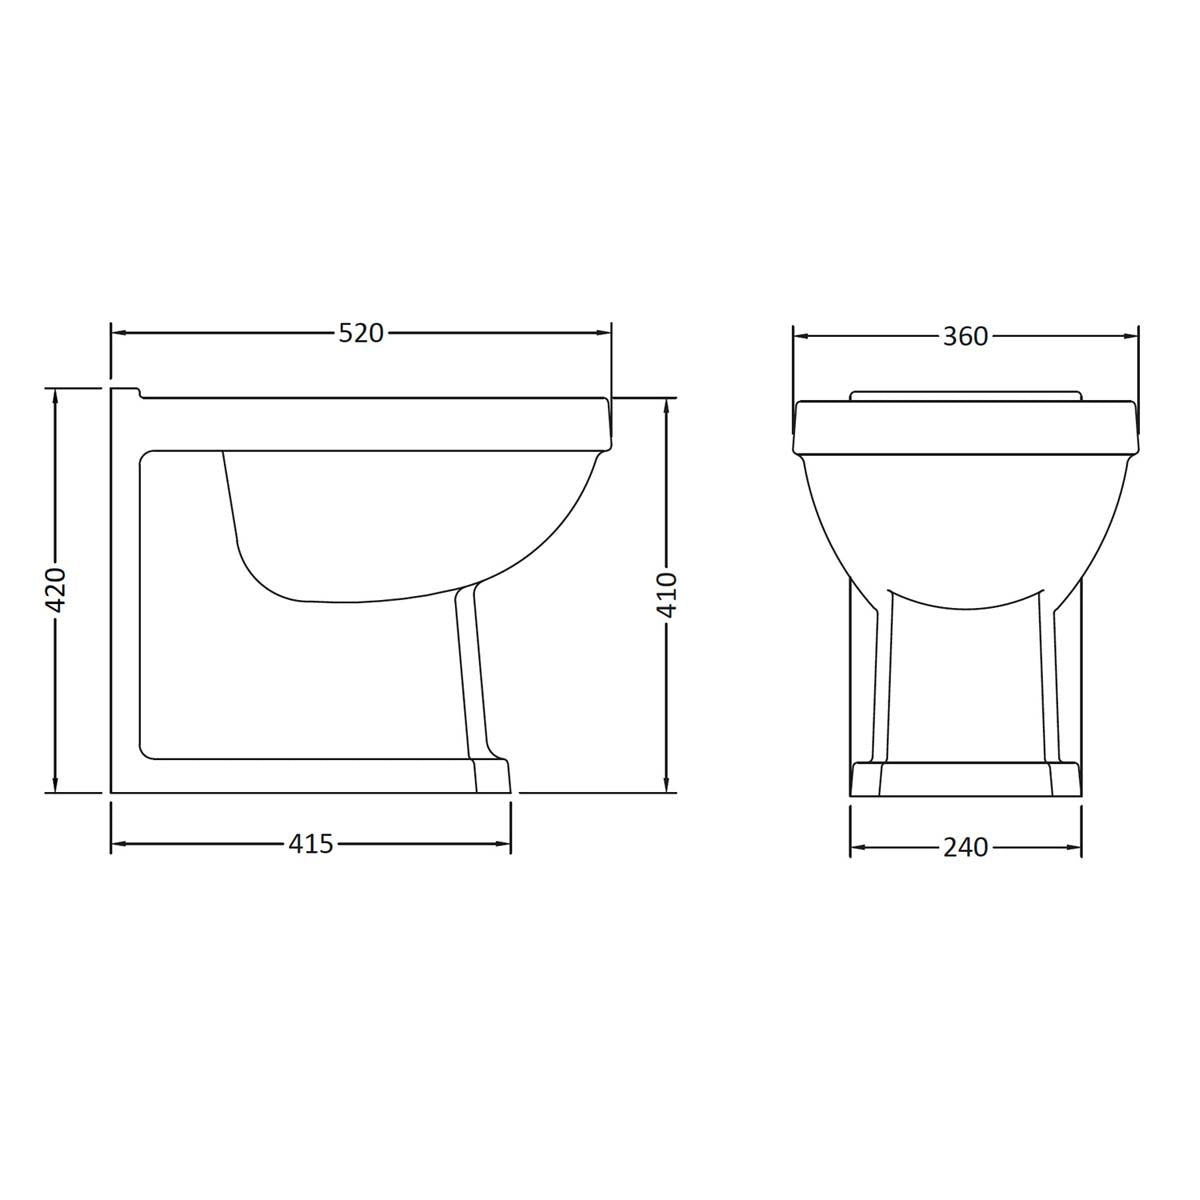 Traditonal Back to Wall Scudo WC Toilet with Toilet Seat Option